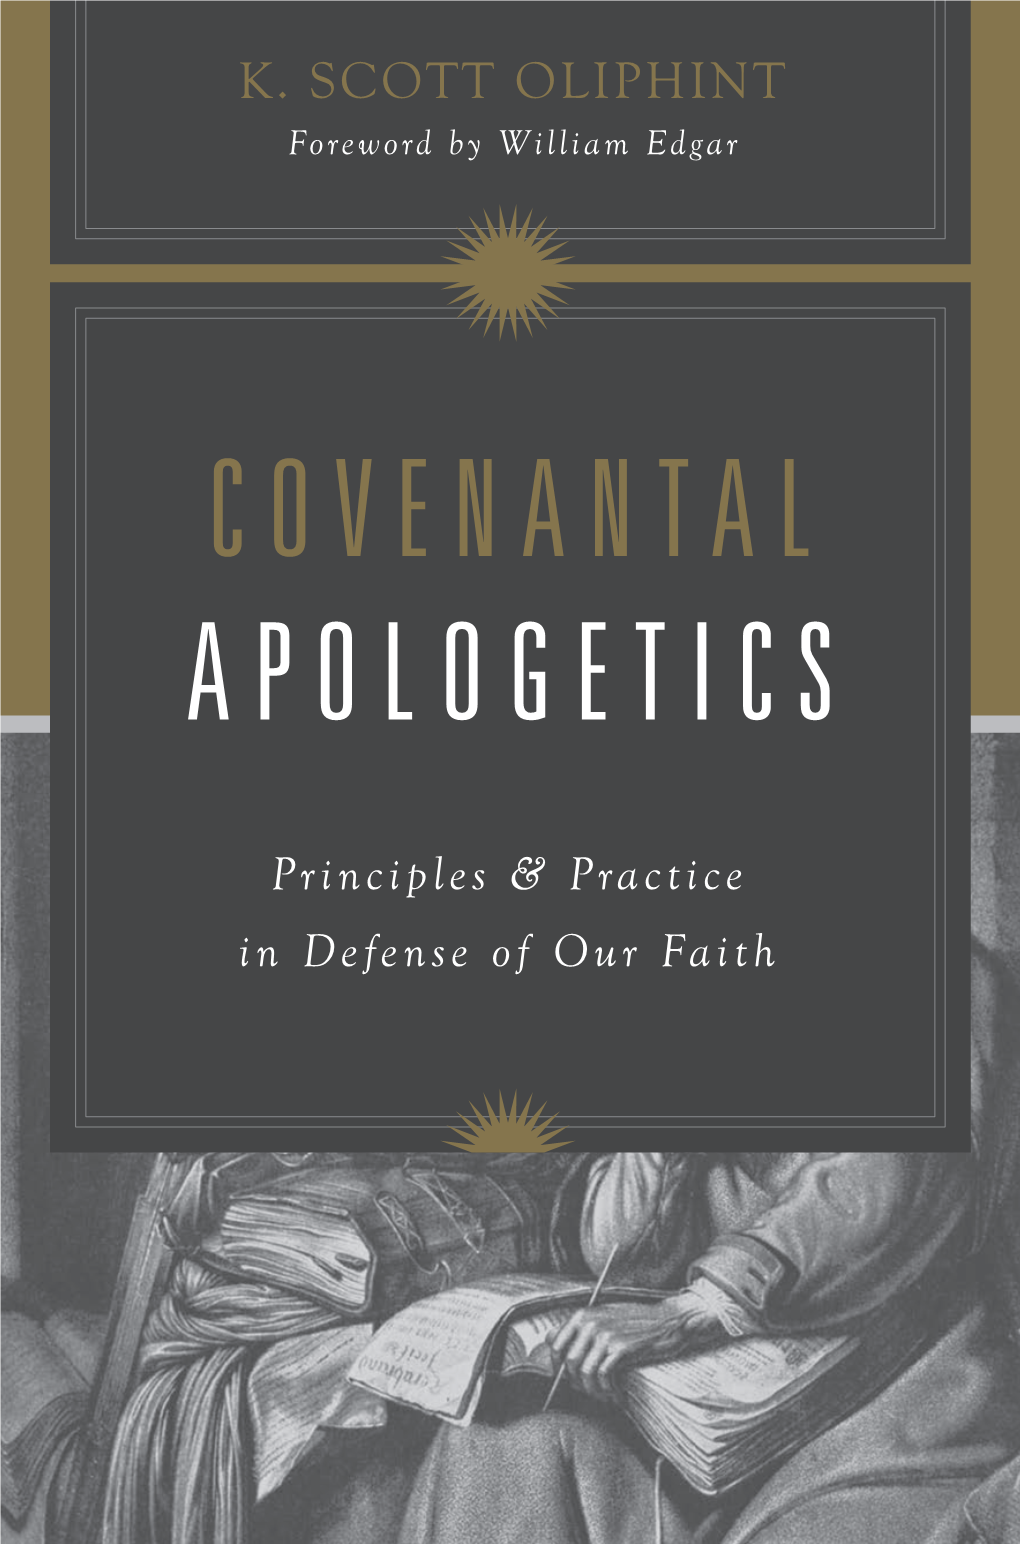 Covenantal Apologetics